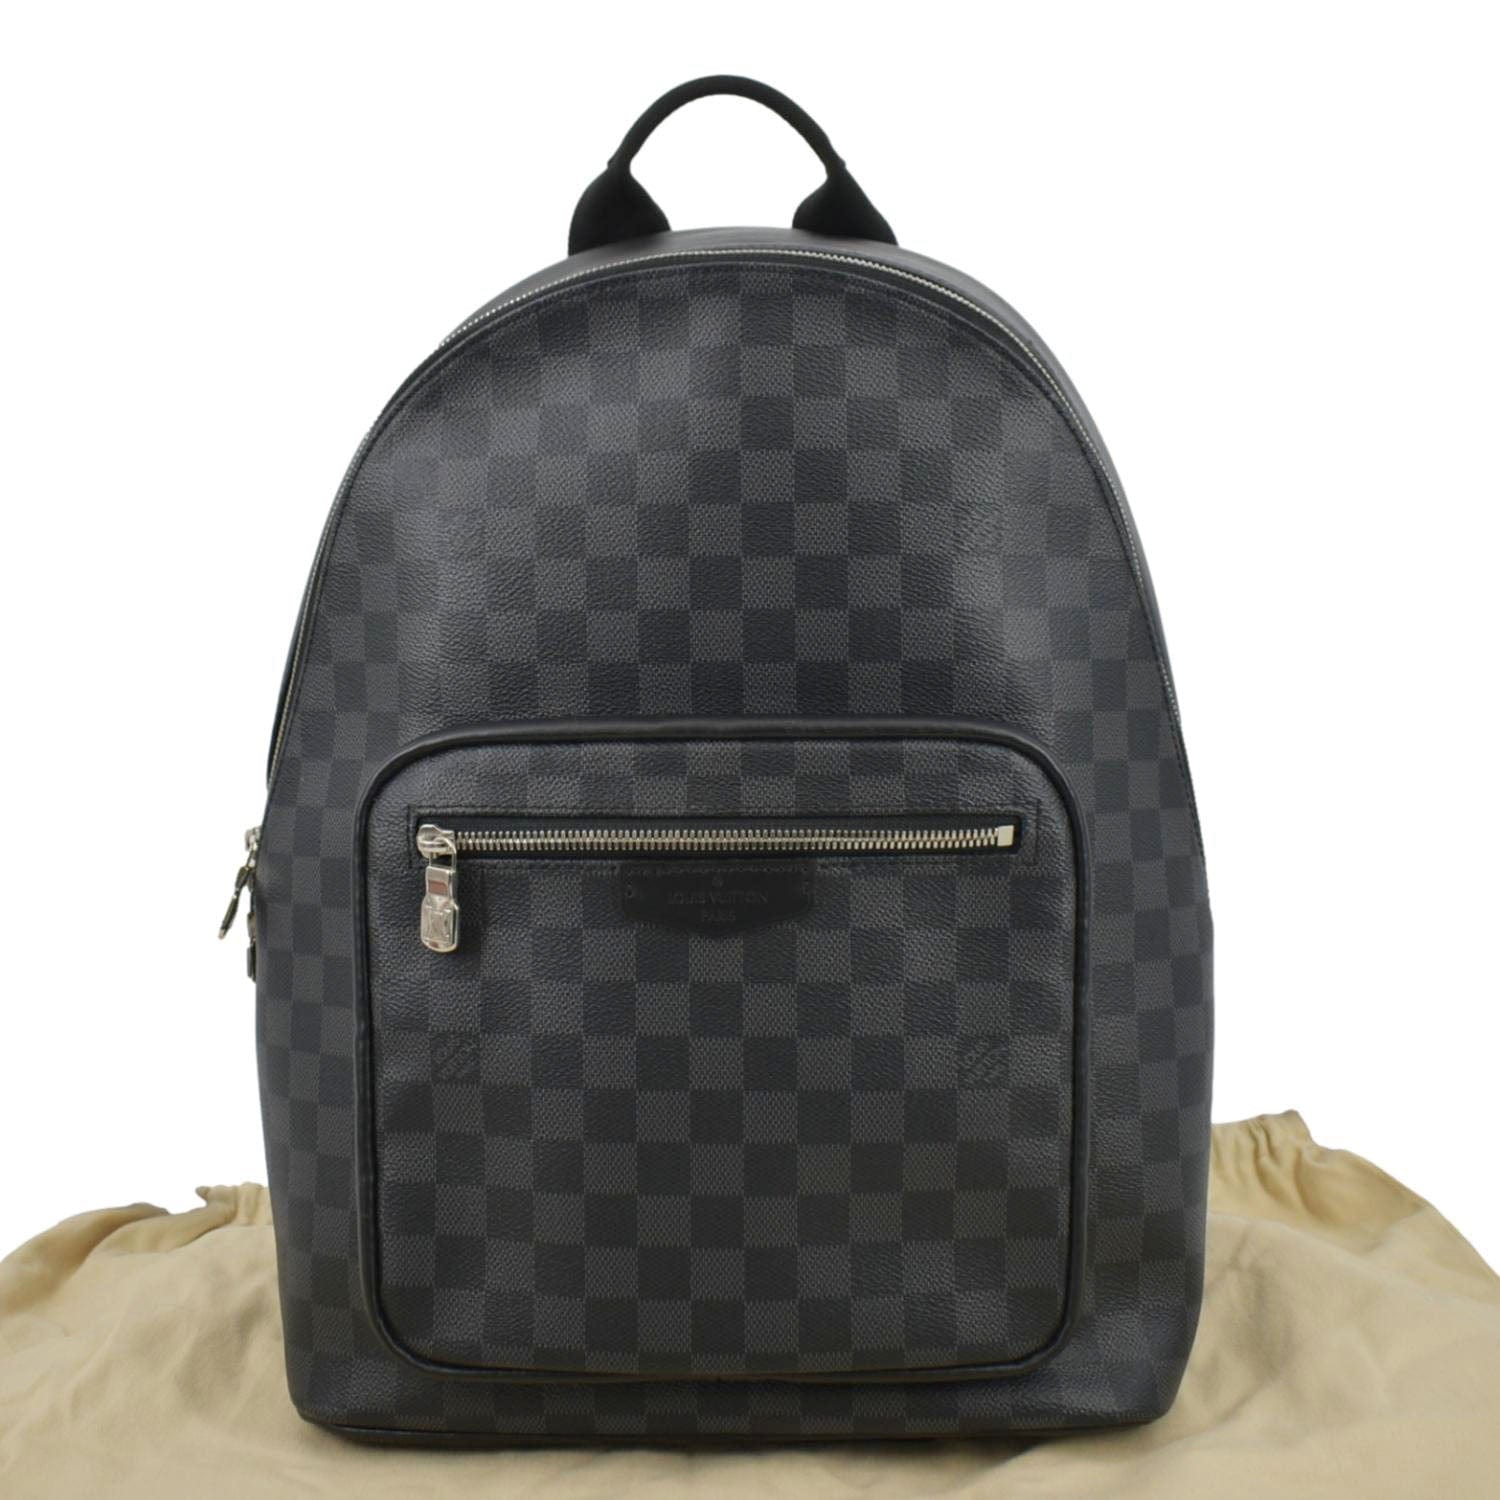 Louis Vuitton Backpack - Damier Graphite Josh